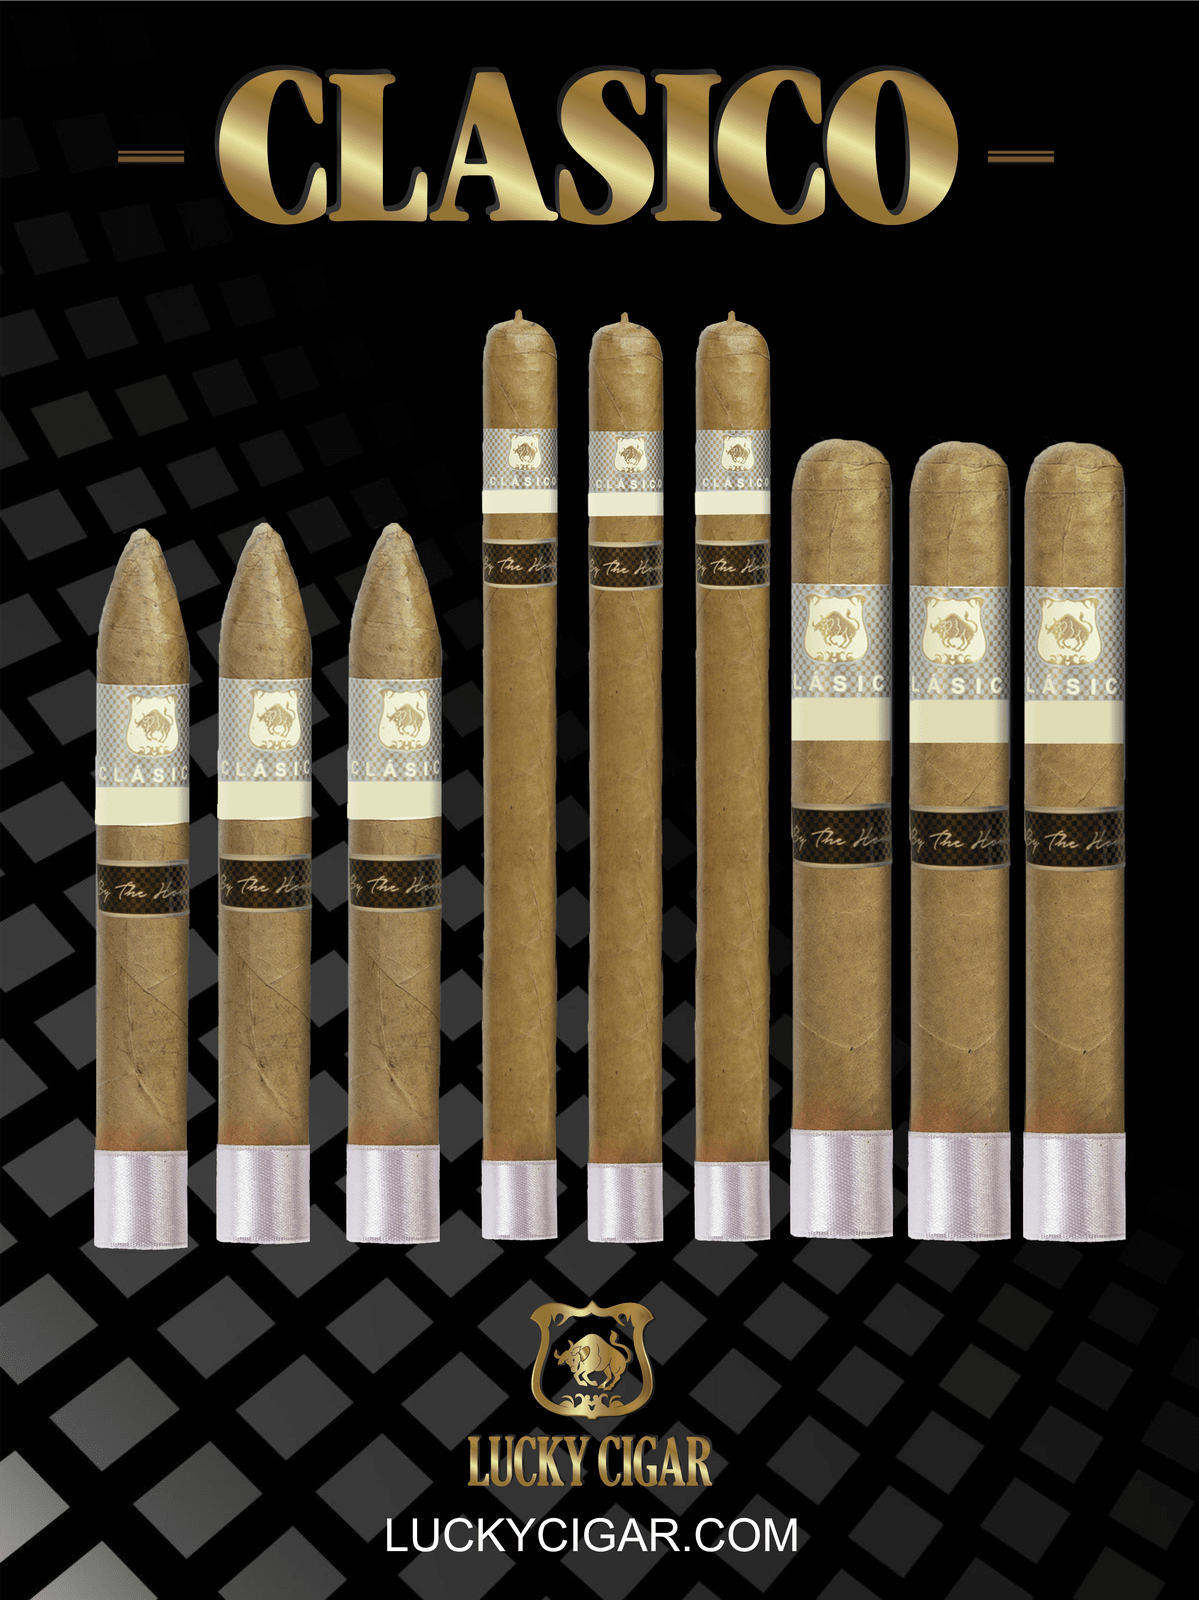 Lucky Cigar Sampler Sets: Set of 9 Classico Cigars, Toro, Lancero, Torpedo